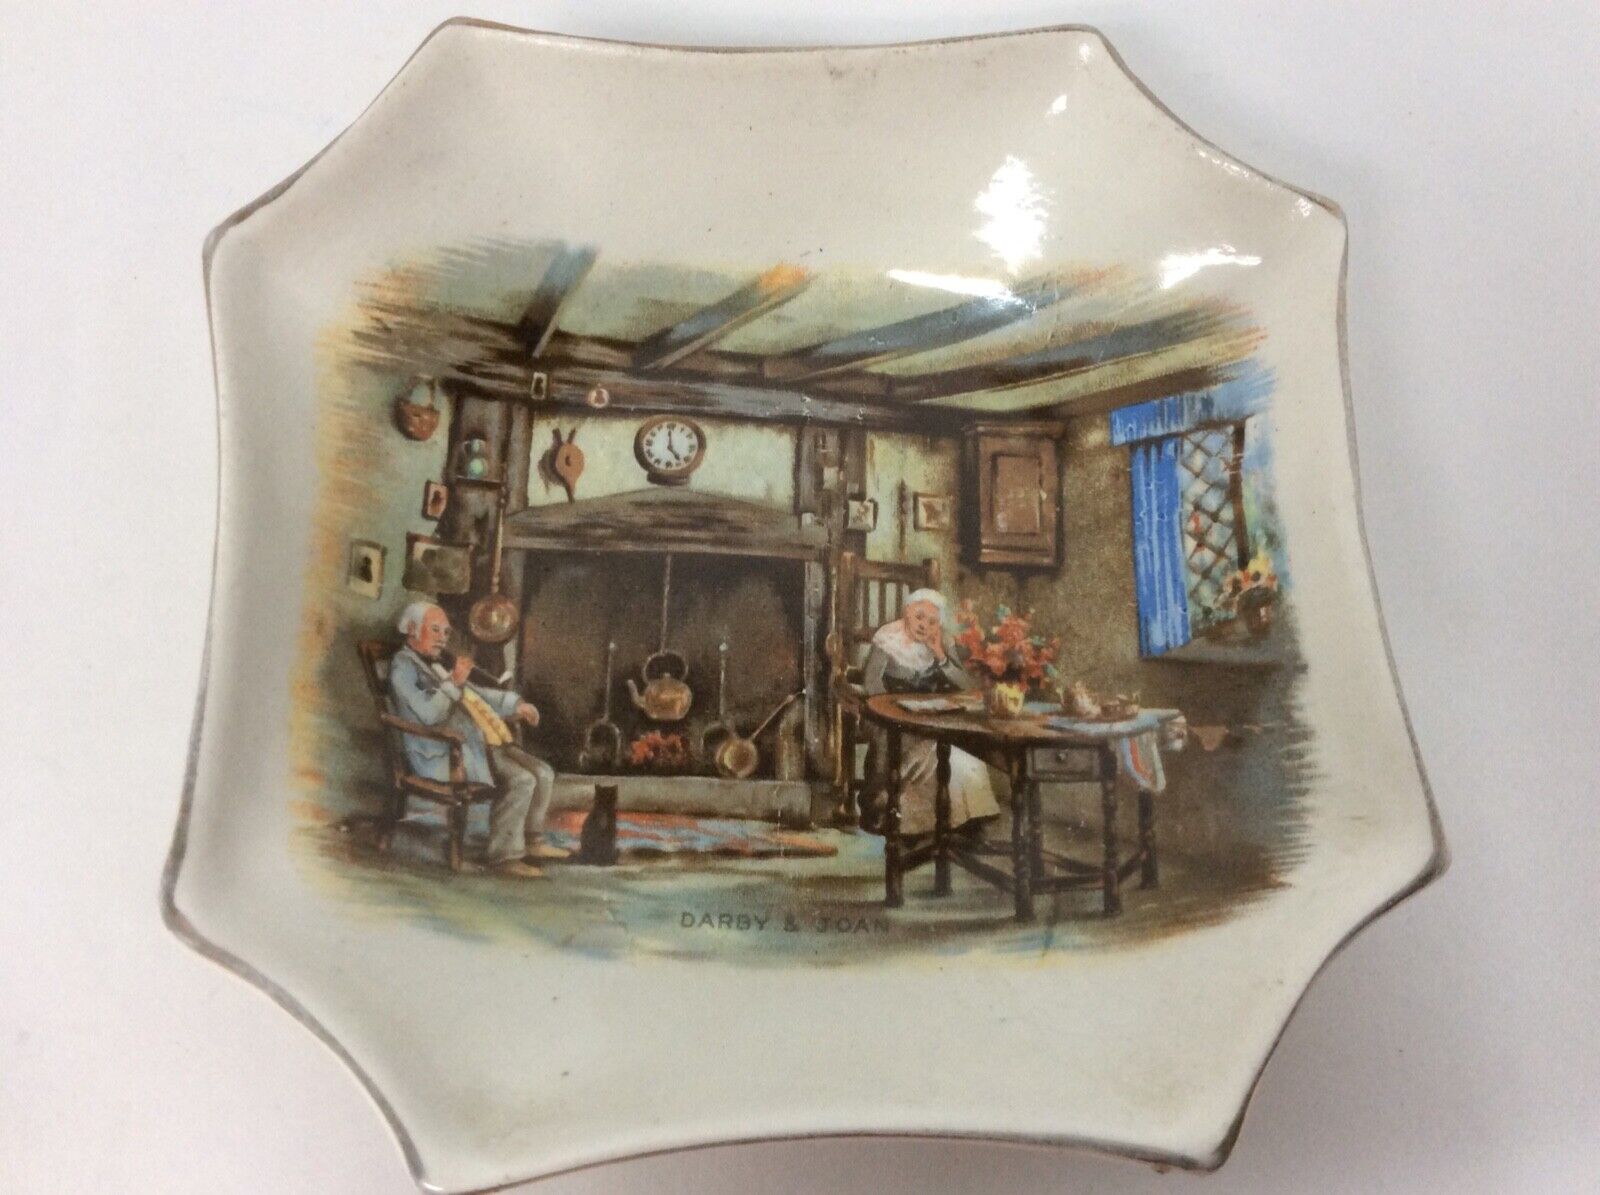 Darby & Joan Porcelain Trinket Dish LTD Lancaster English Ware Rare Antique